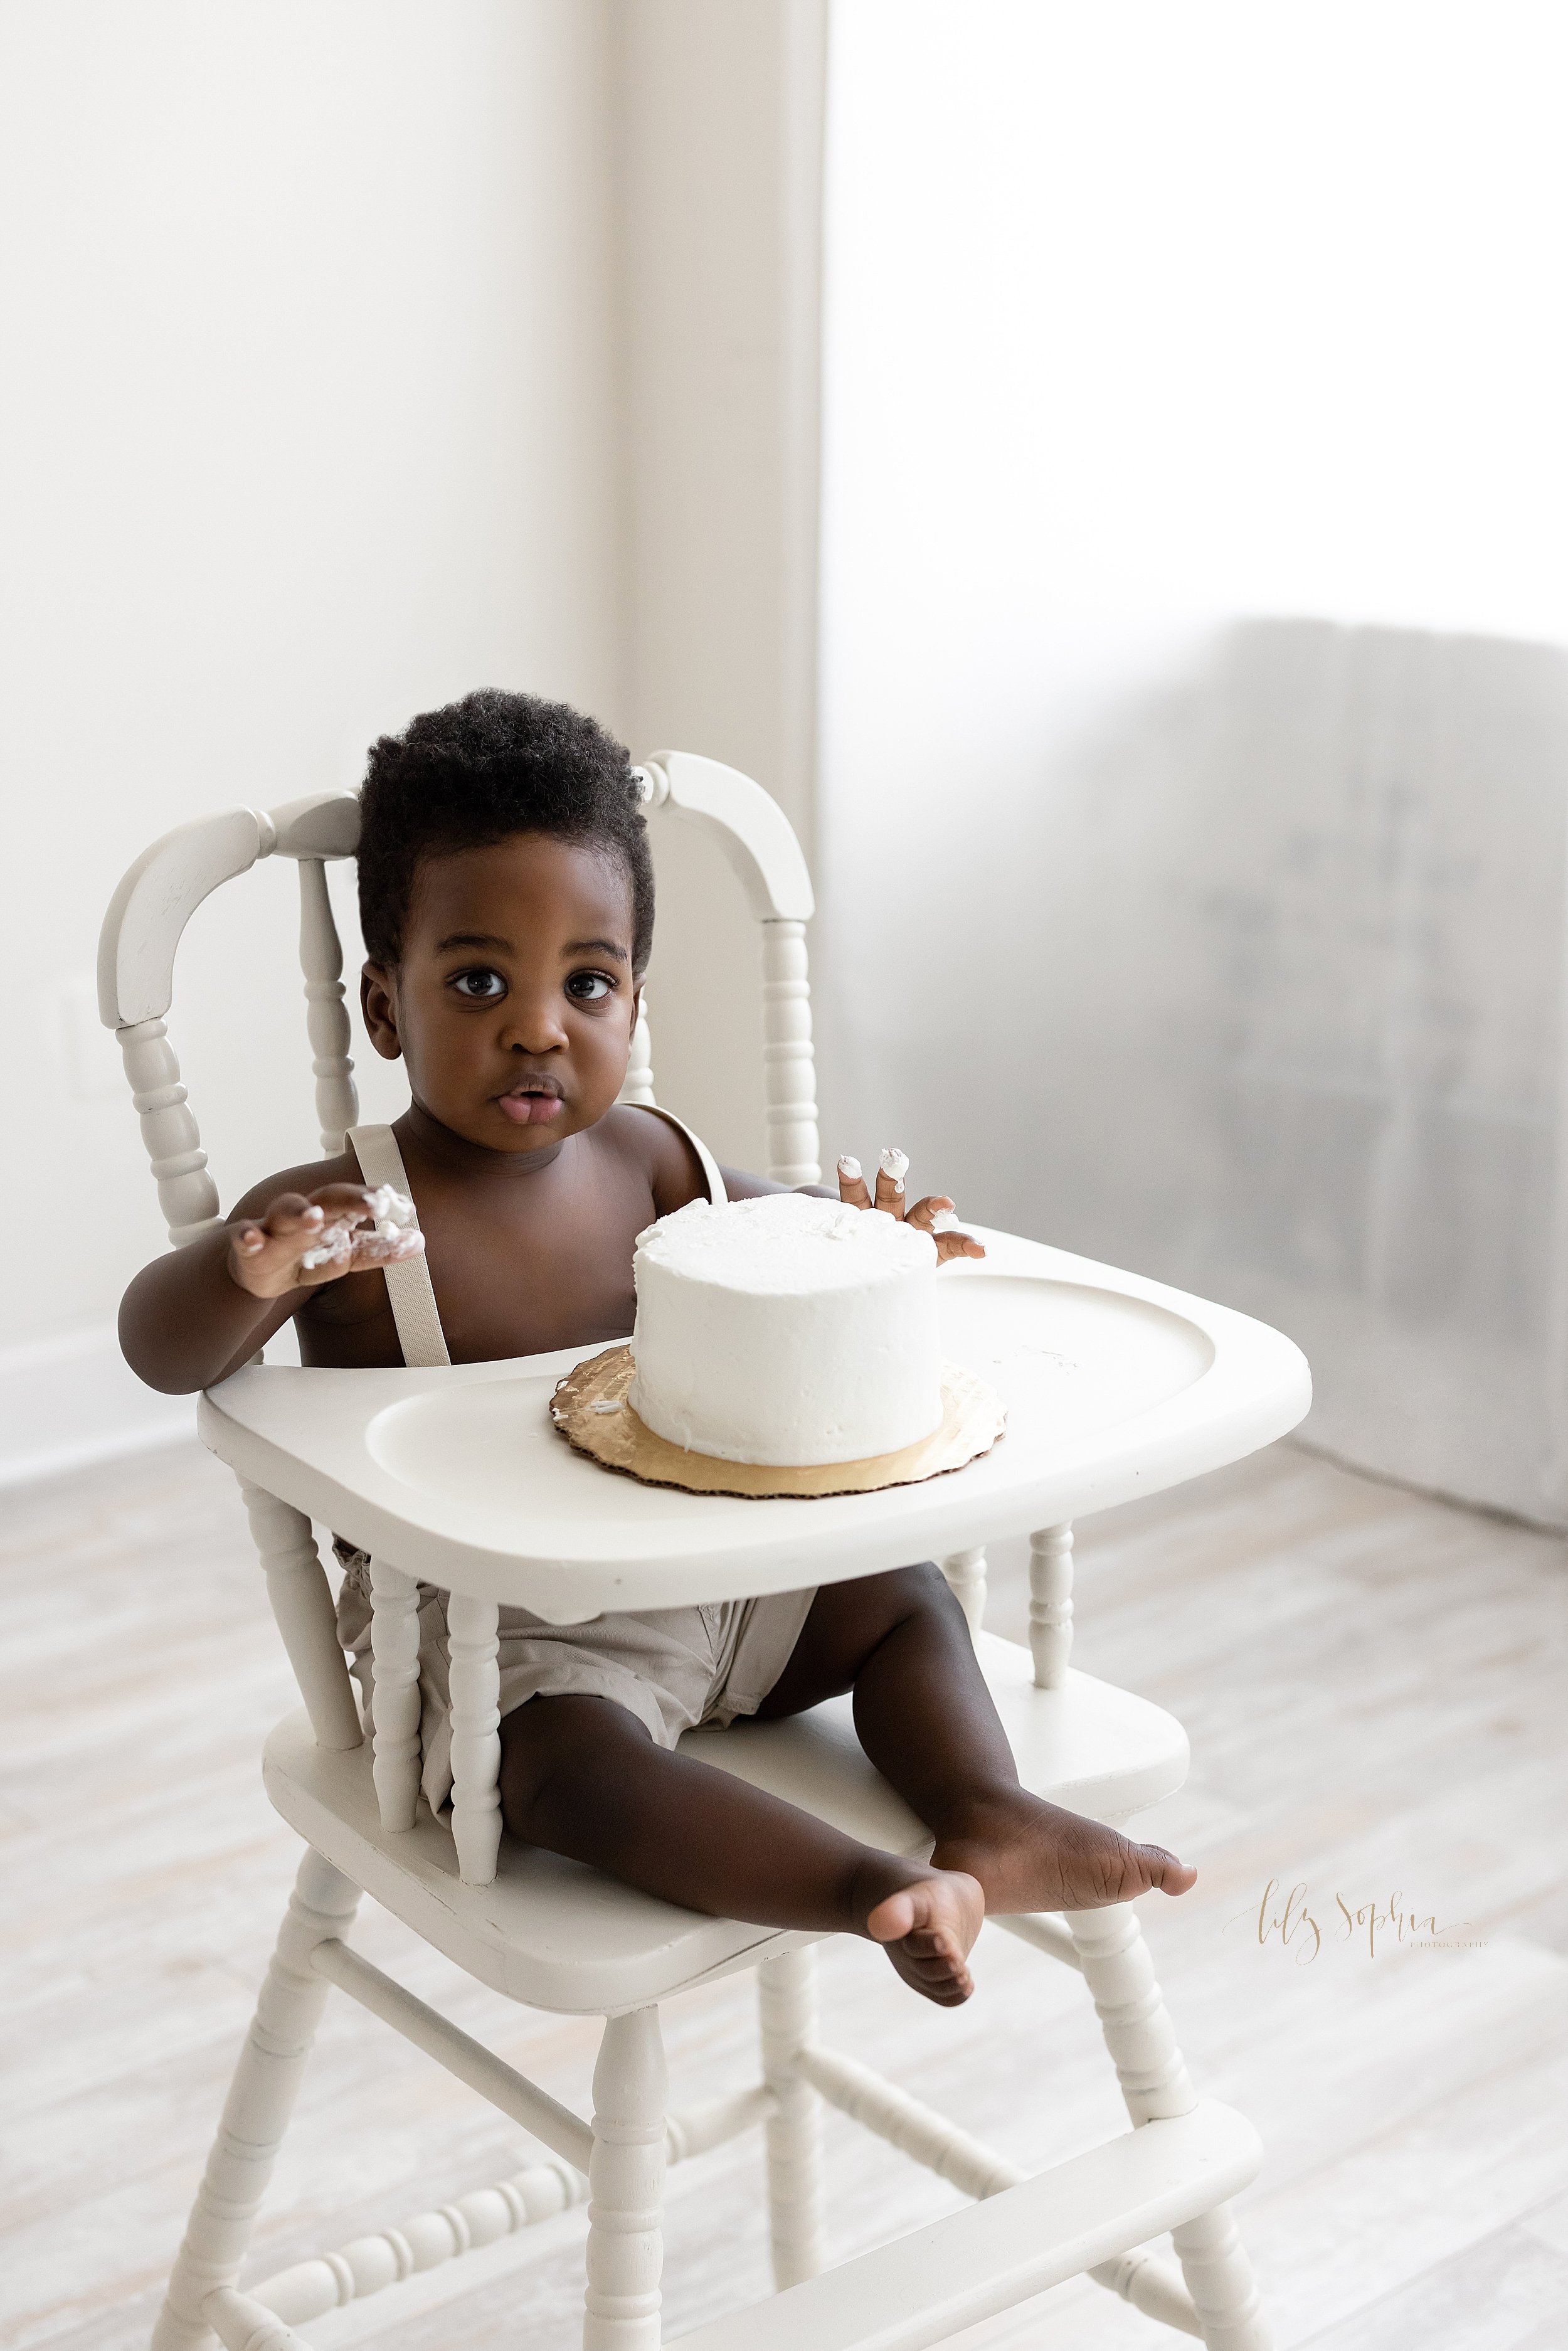 intown-atlanta-grant-park-kirkwood-decatur-first-birthday-baby-boy-cake-smash-black-french-family-studio-photos_0237.jpg